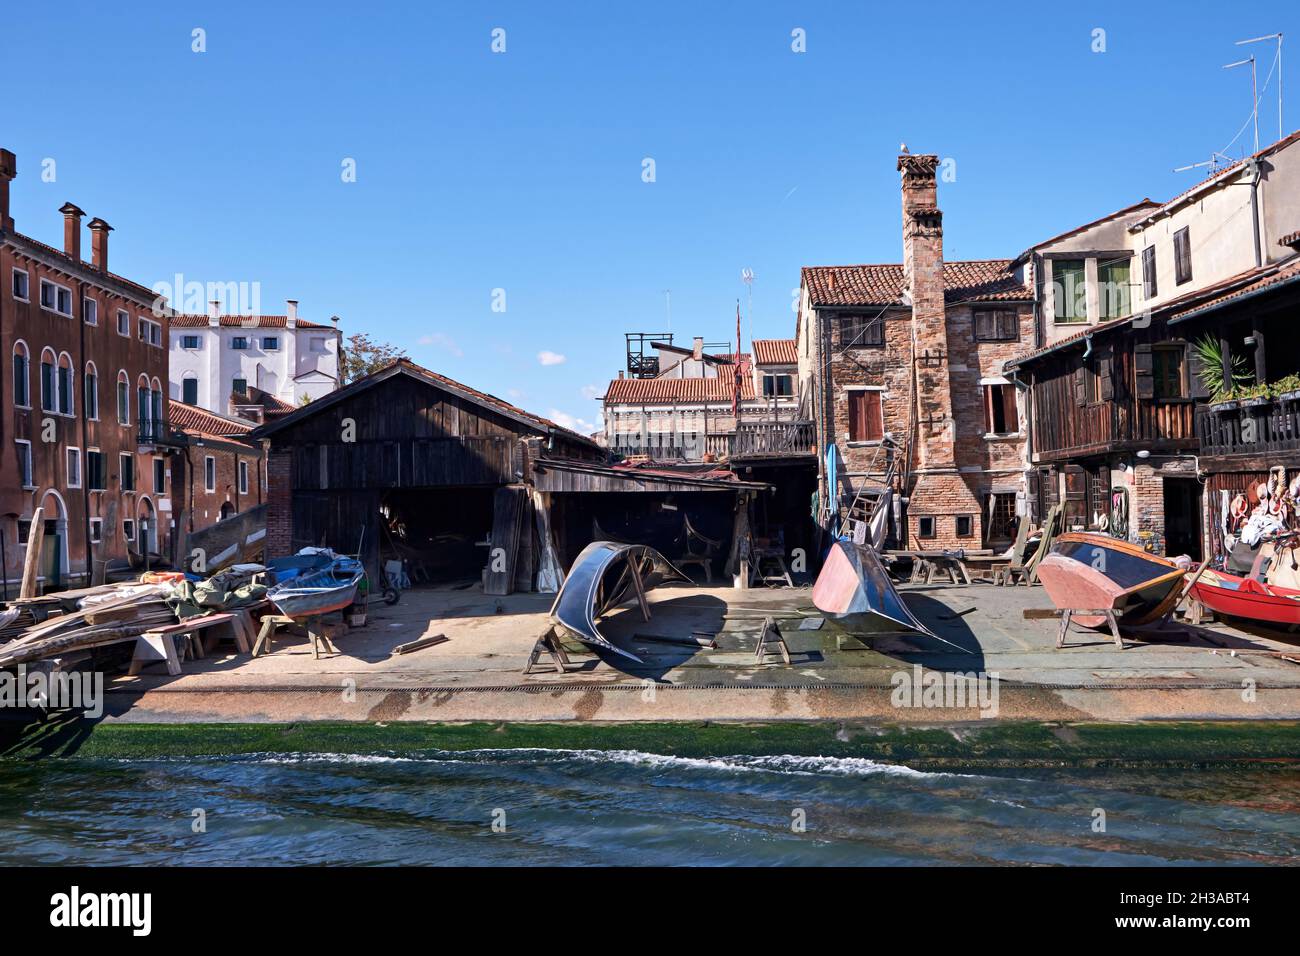 Venice, panoramic image of empty Squero di San Trovaso boatyard in Venice. Landmark boat yard building traditional wooden gondolas. Stock Photo